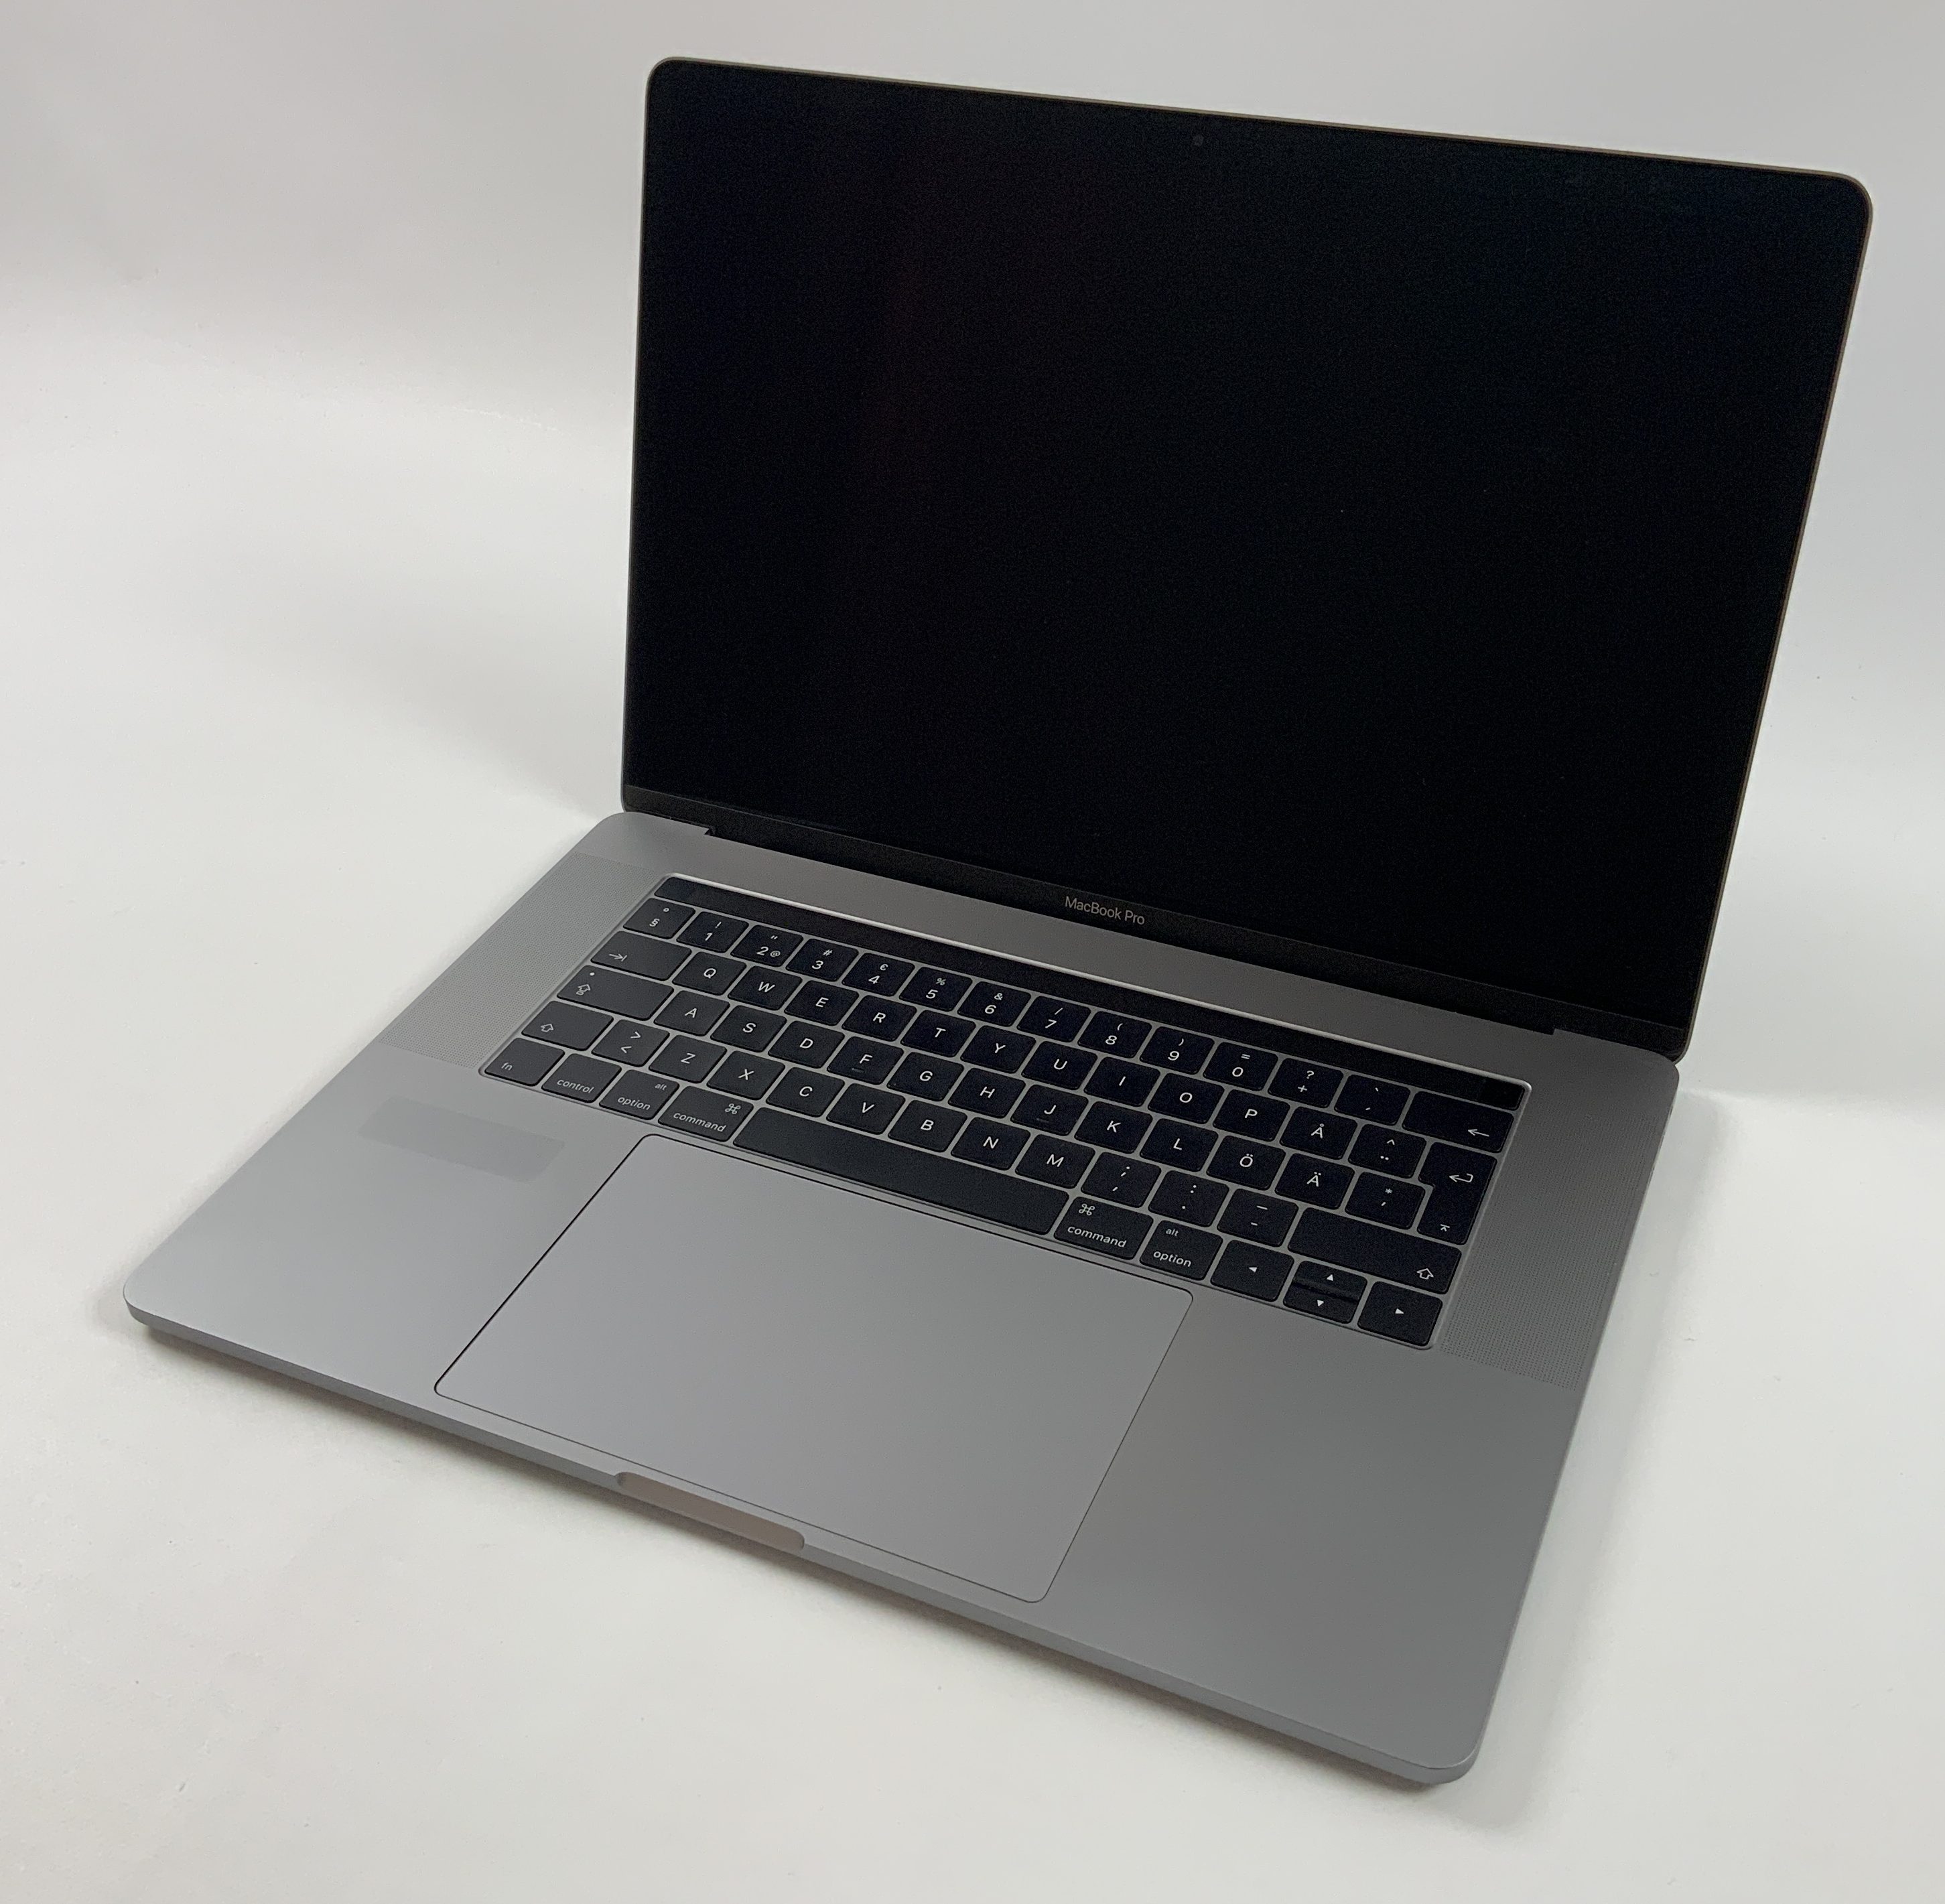 MacBook Pro 15" Touch Bar Late 2016 (Intel Quad-Core i7 2.6 GHz 16 GB RAM 256 GB SSD), Space Gray, Intel Quad-Core i7 2.6 GHz, 16 GB RAM, 256 GB SSD, immagine 1